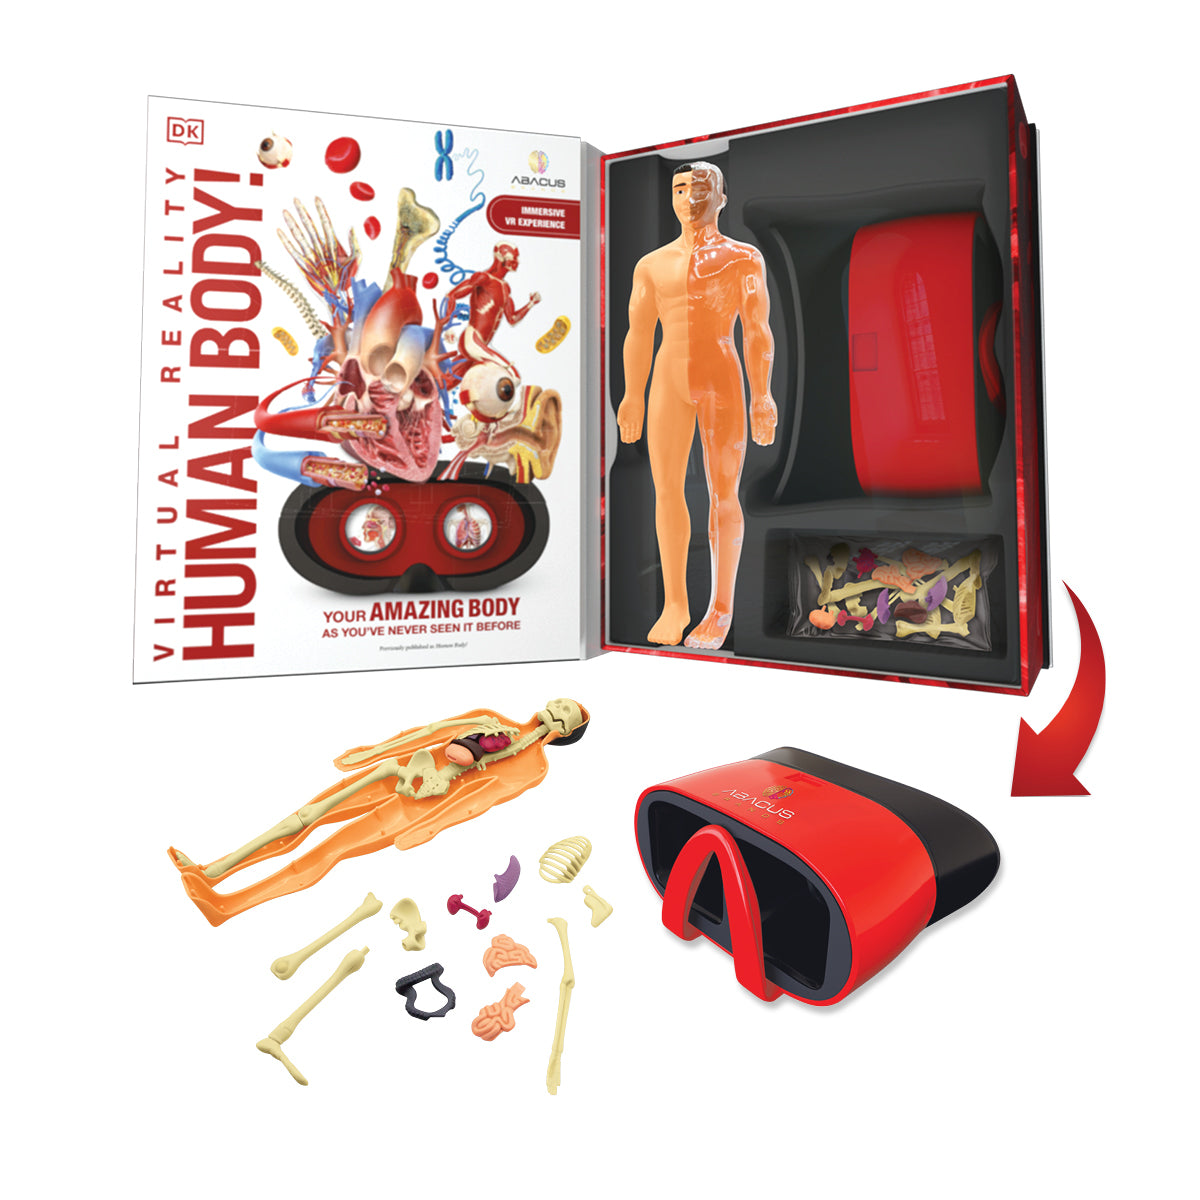 Virtual Reality Discovery Gift Set w/ DK Book - Human Body!